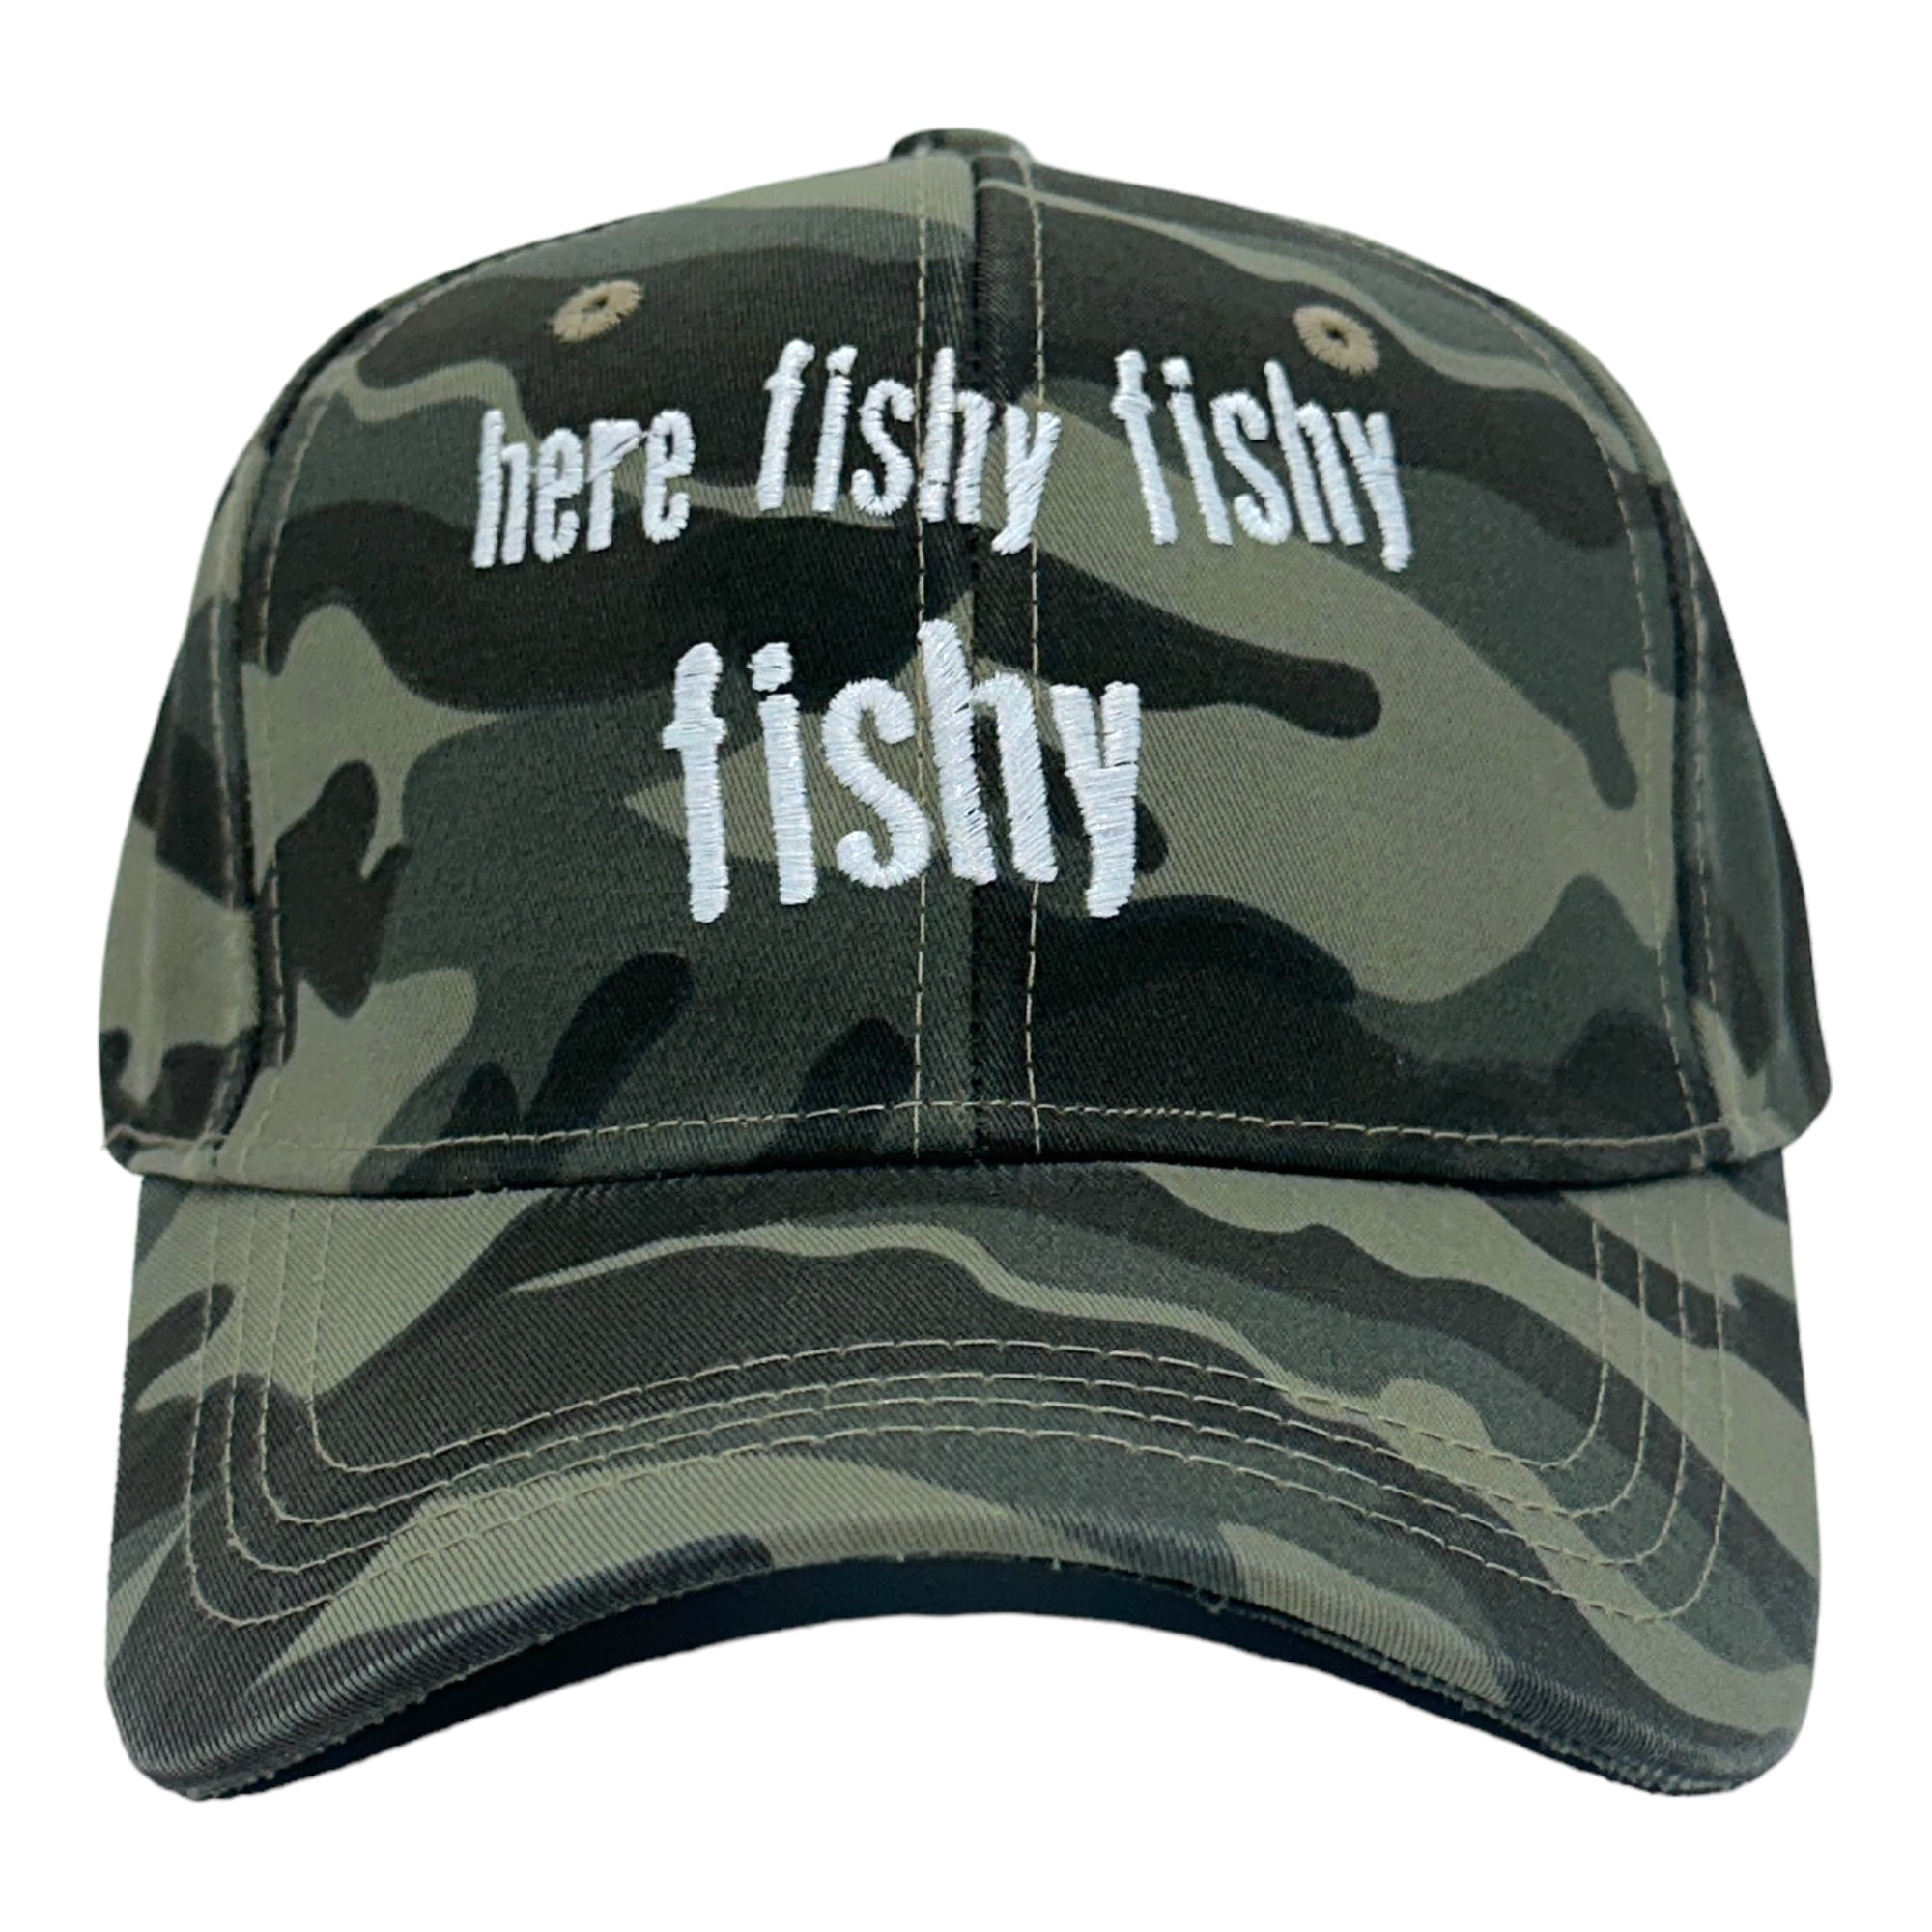 Here Fishy Fishy Fishy Hat Funny Outdoor Fishing Lovers Camo Cap 